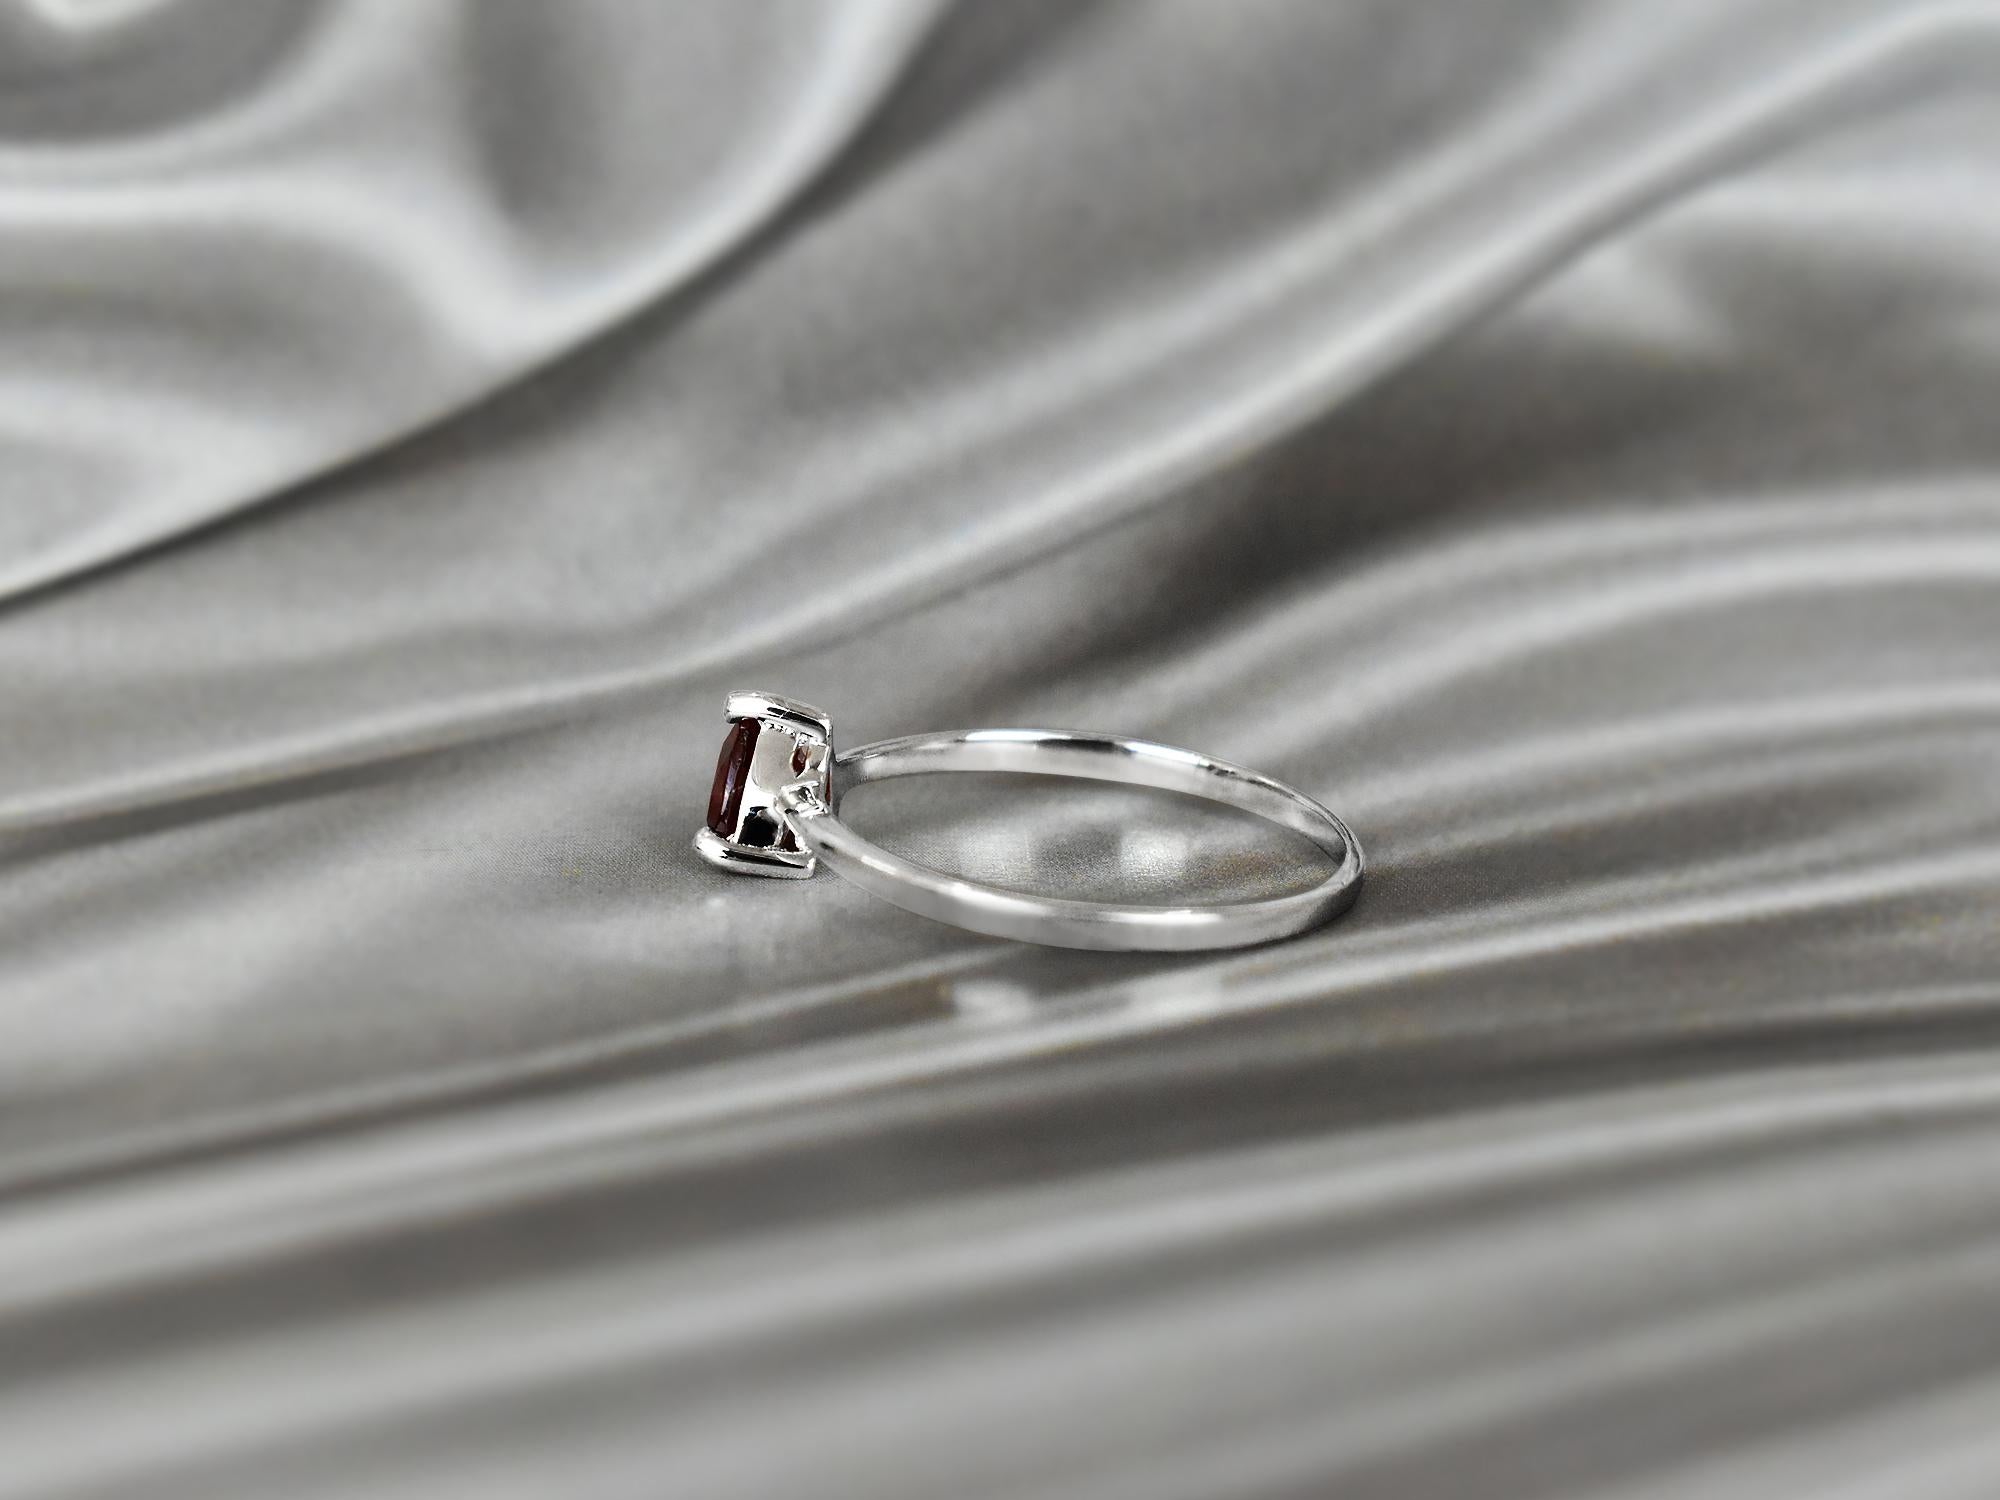 For Sale:  14k Gold Trillion Gemstone 6 mm Trillion Gemstone Engagement Ring Stackable Ring 10